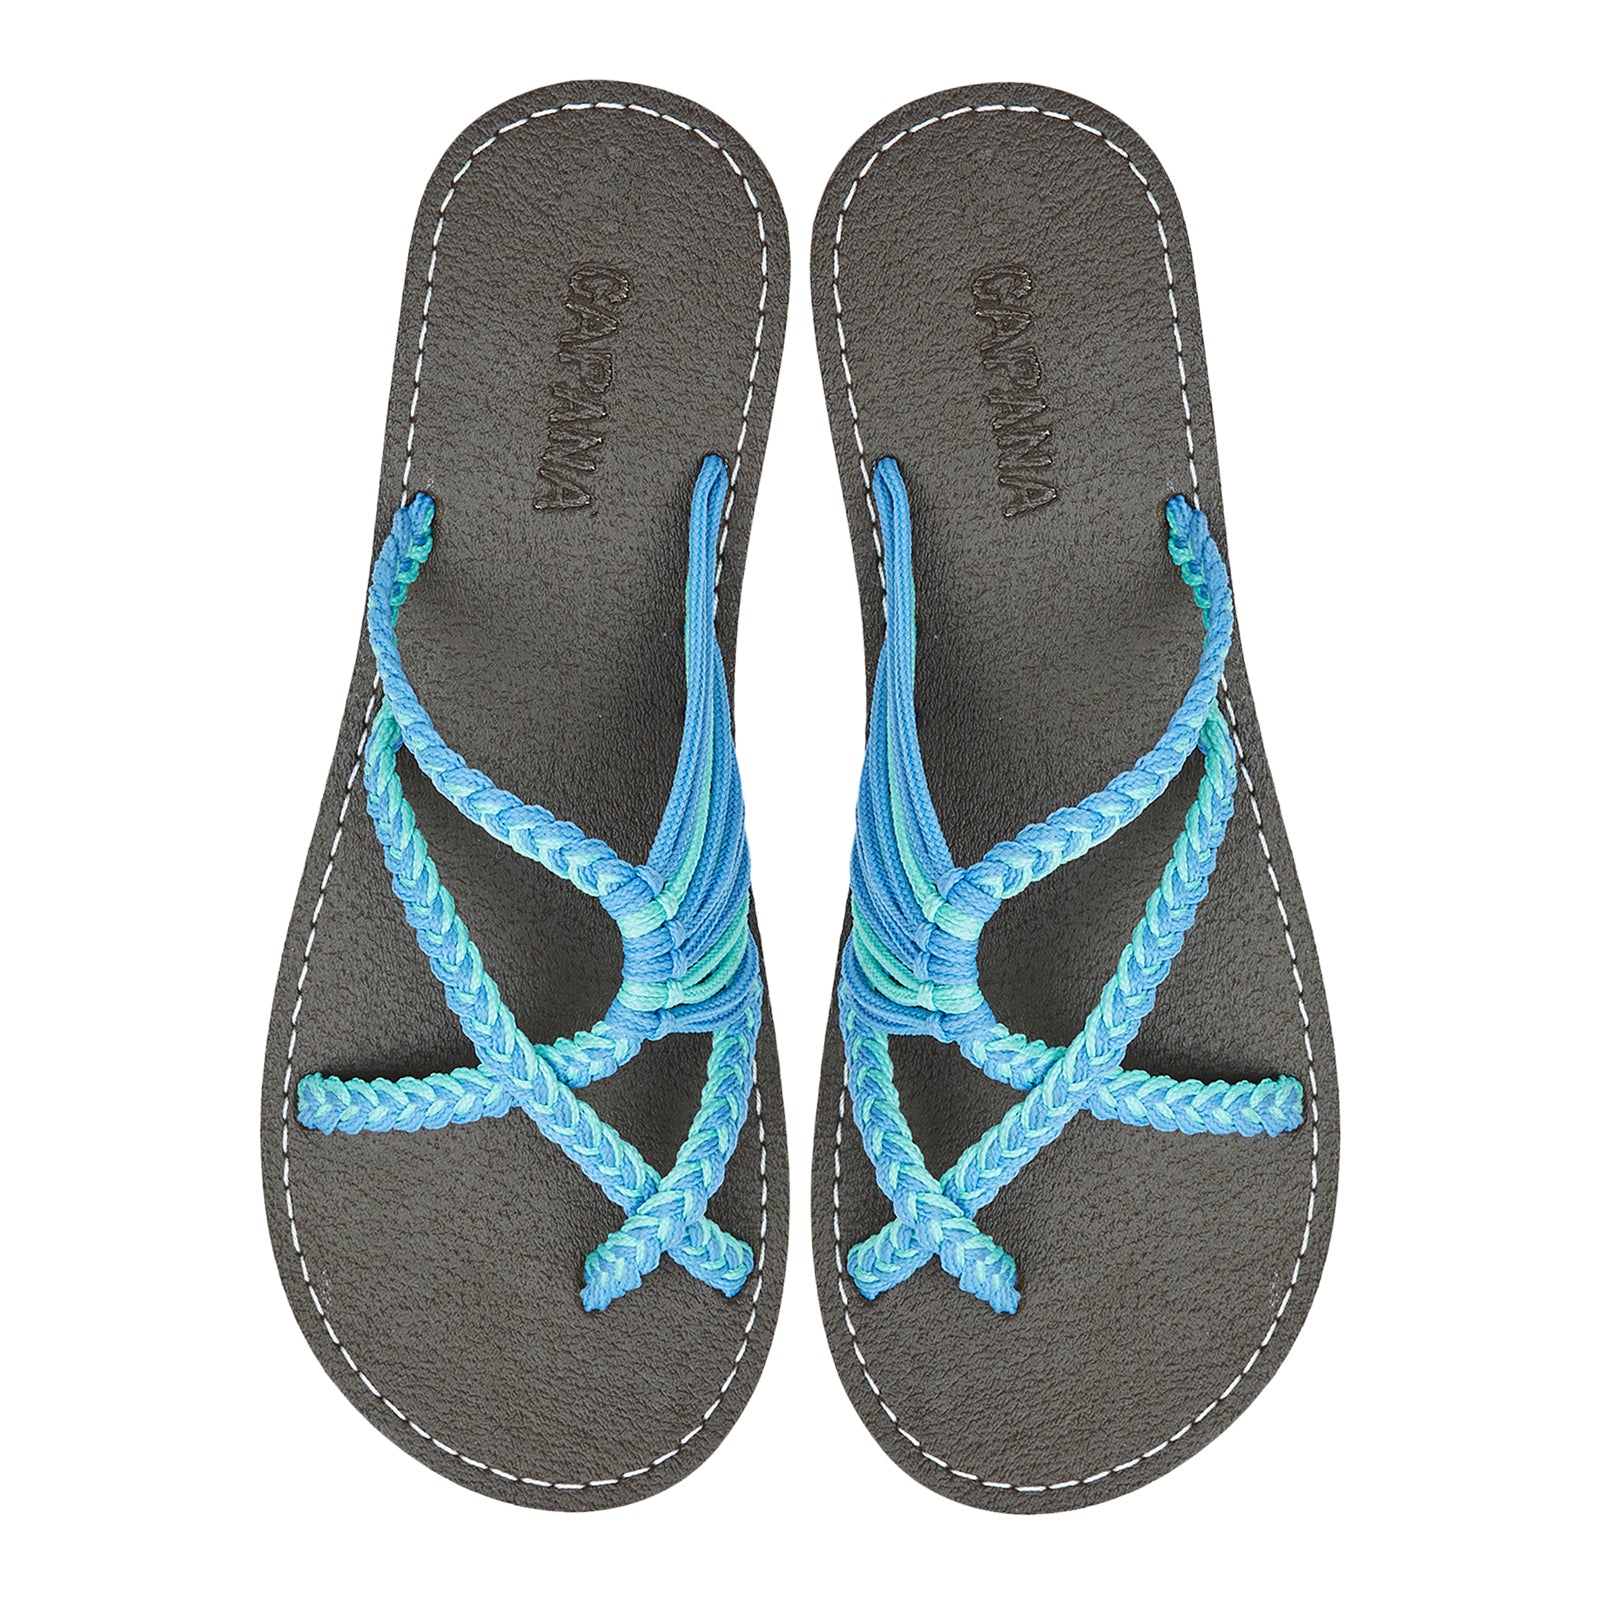 Oceanbliss Turquoise Sky Blue Rope Sandals Mint Blue Crisscross design Flat Handmade sandals for women